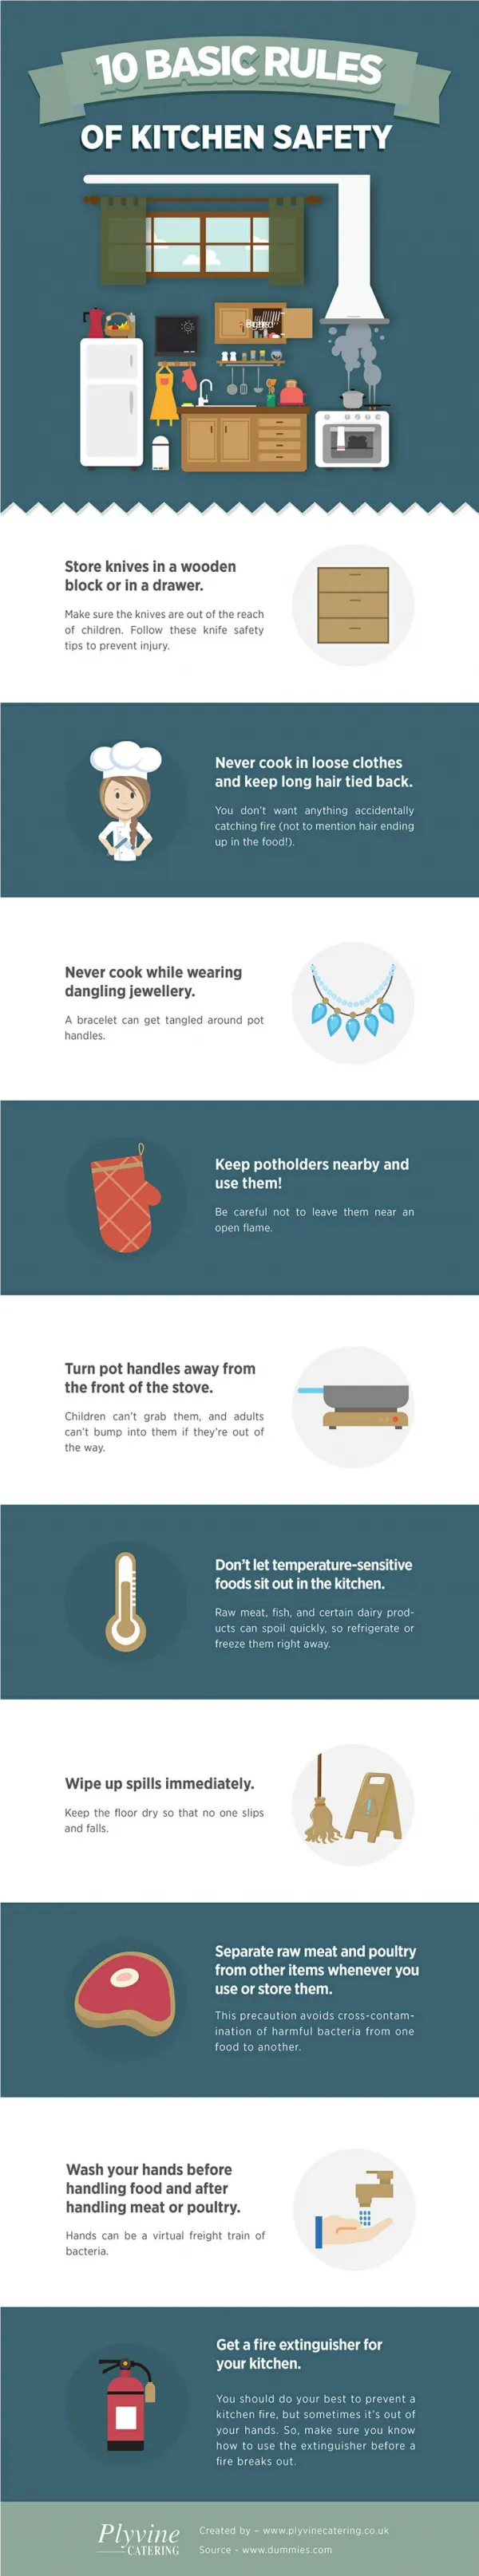 10 Basic Rules of Kitchen Safety